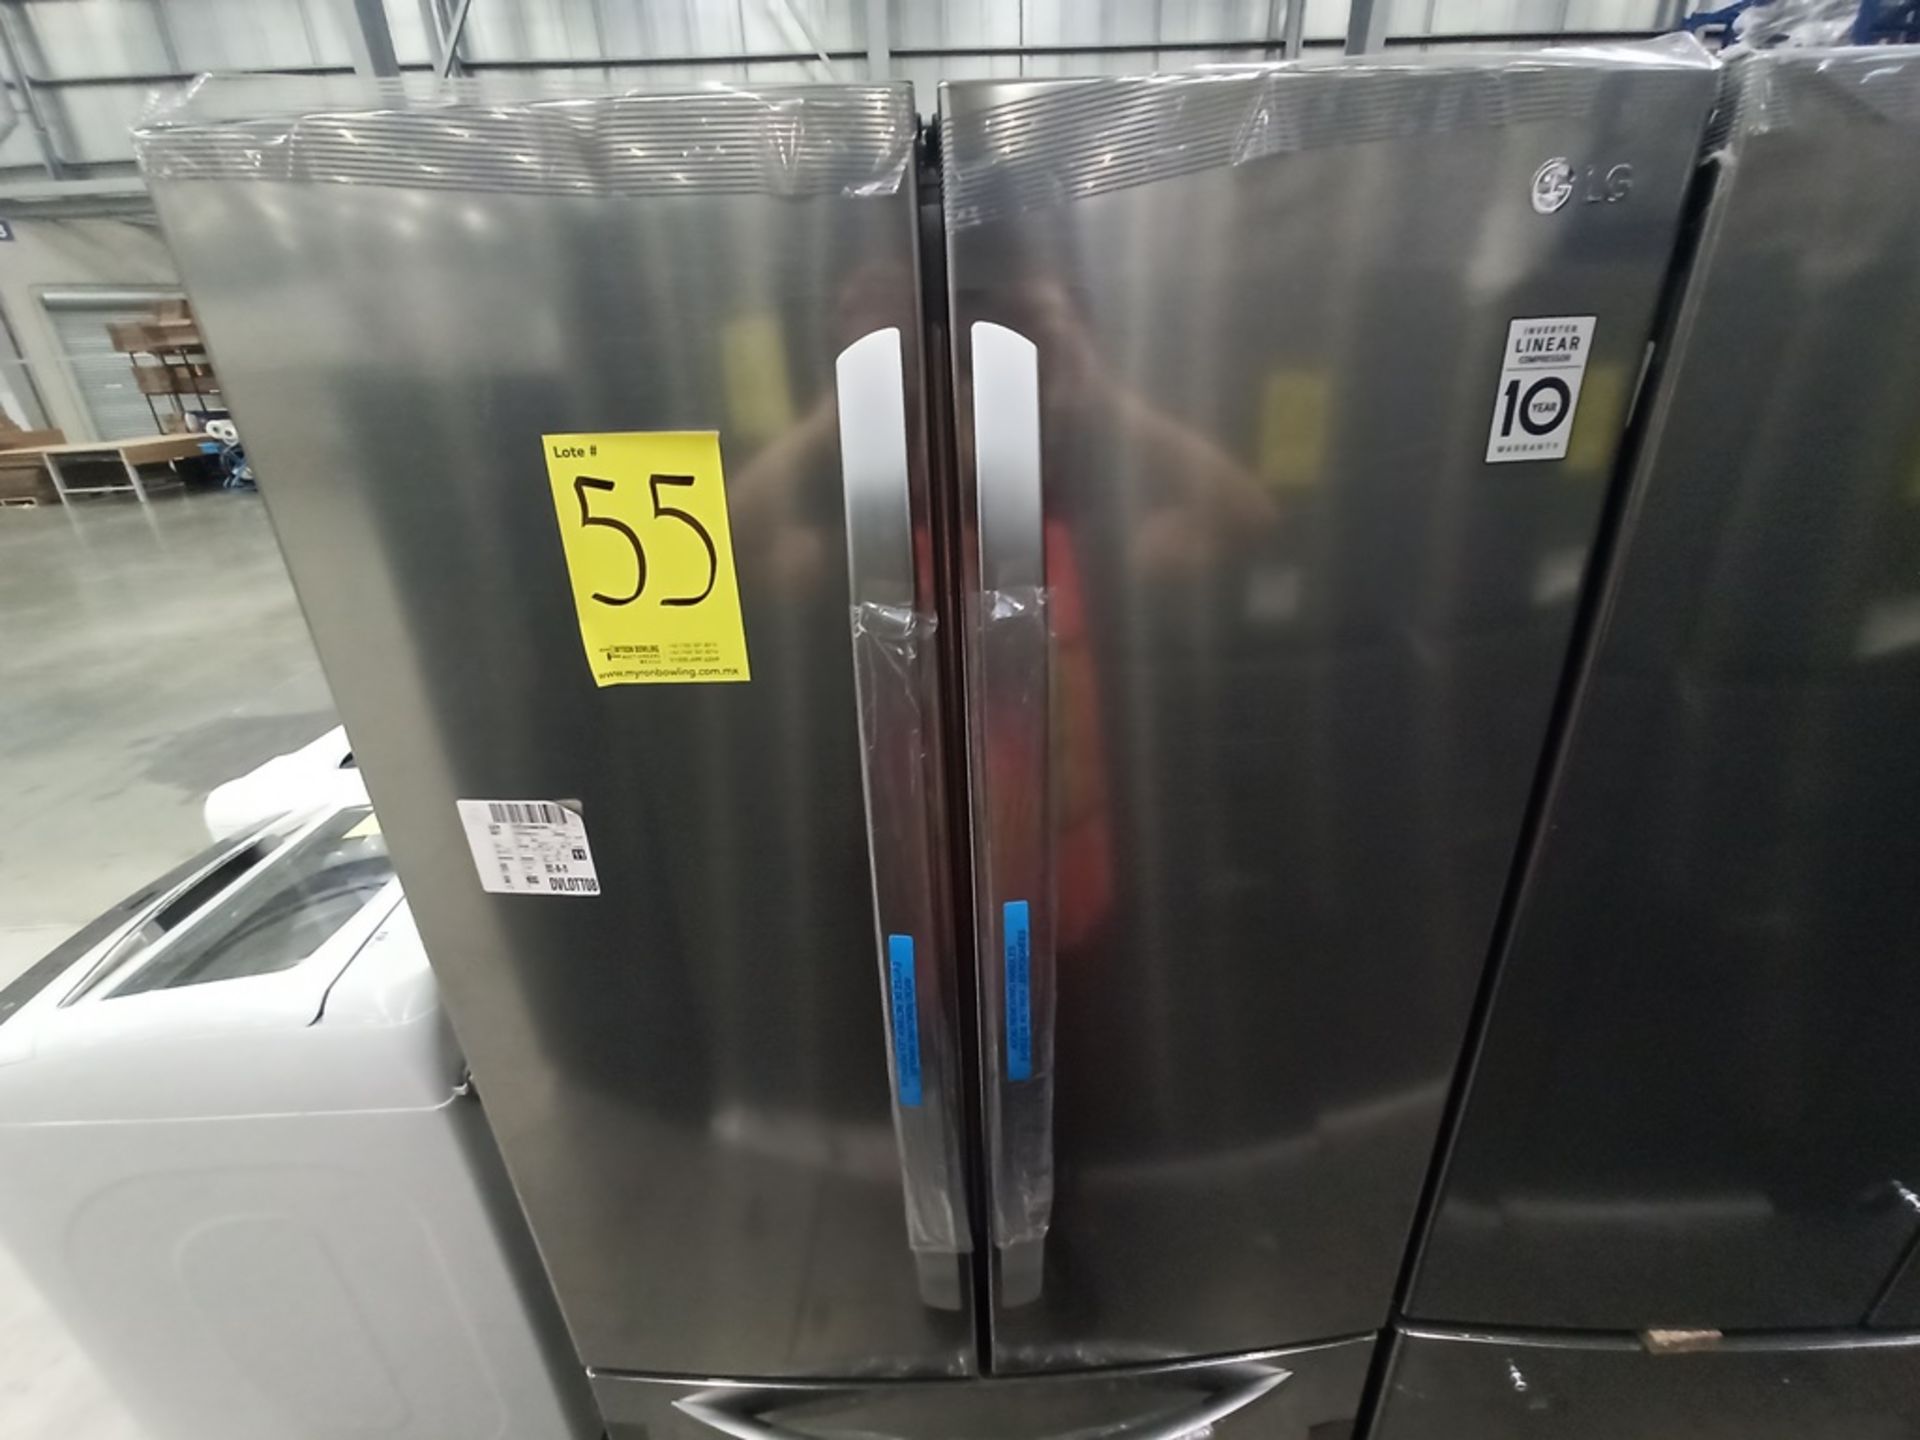 1 Refrigerador Marca LG, Modelo LM65BGSK, Serie A06674, Color GRIS, LB-612024, No se Asegura su fun